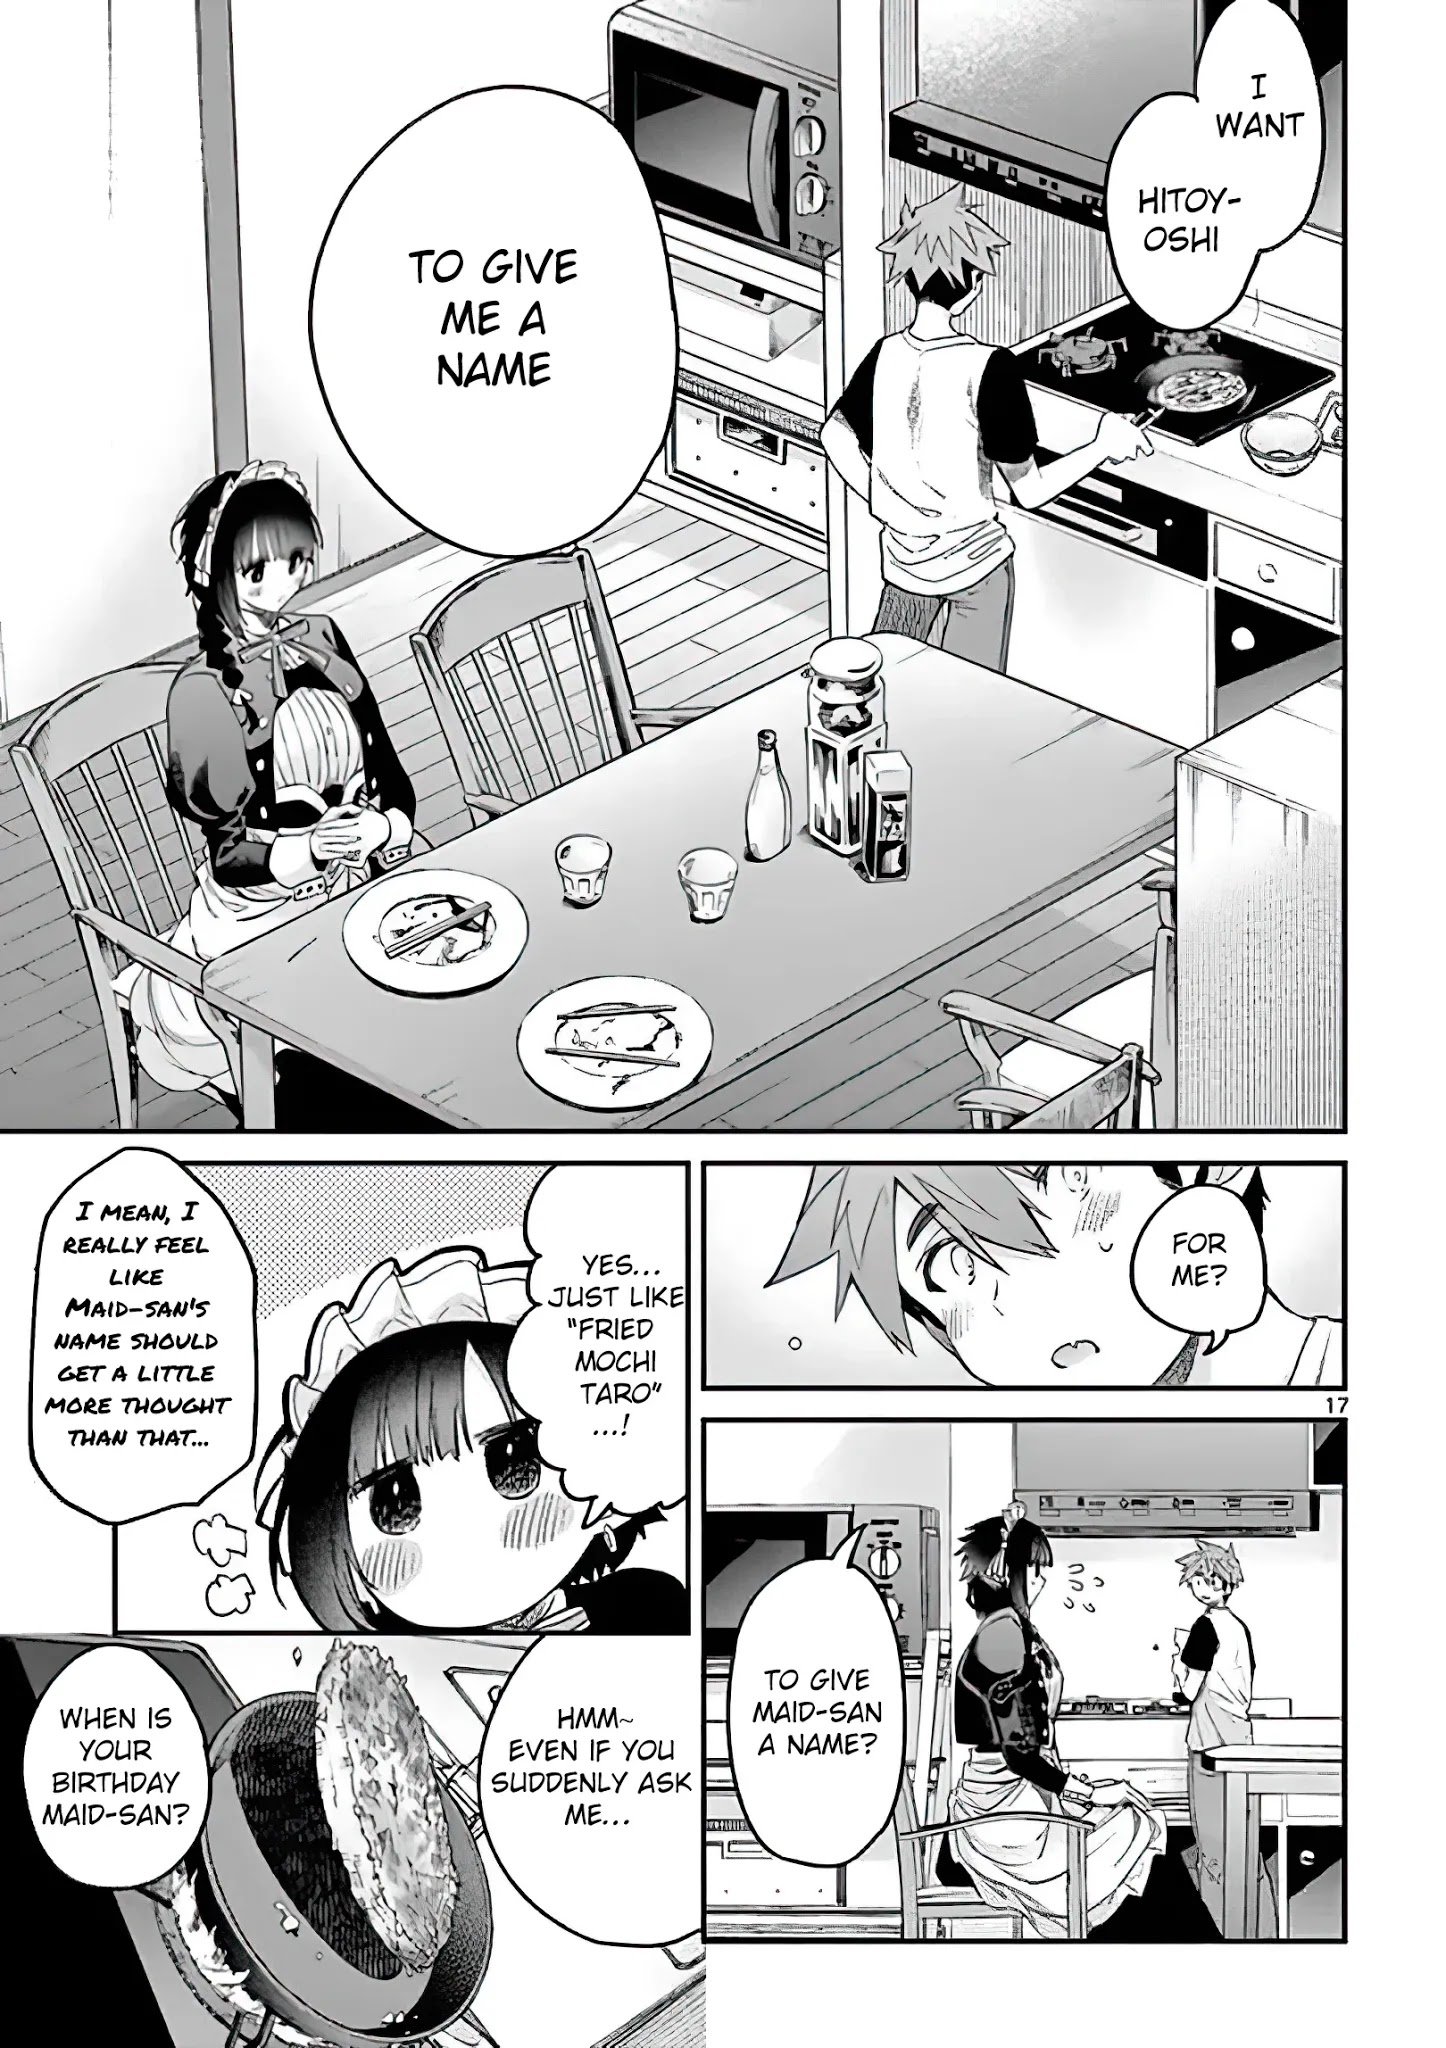 Kimi wa Meido-sama. (You are Ms. Servant.) #6 / Comic – MOYASHI